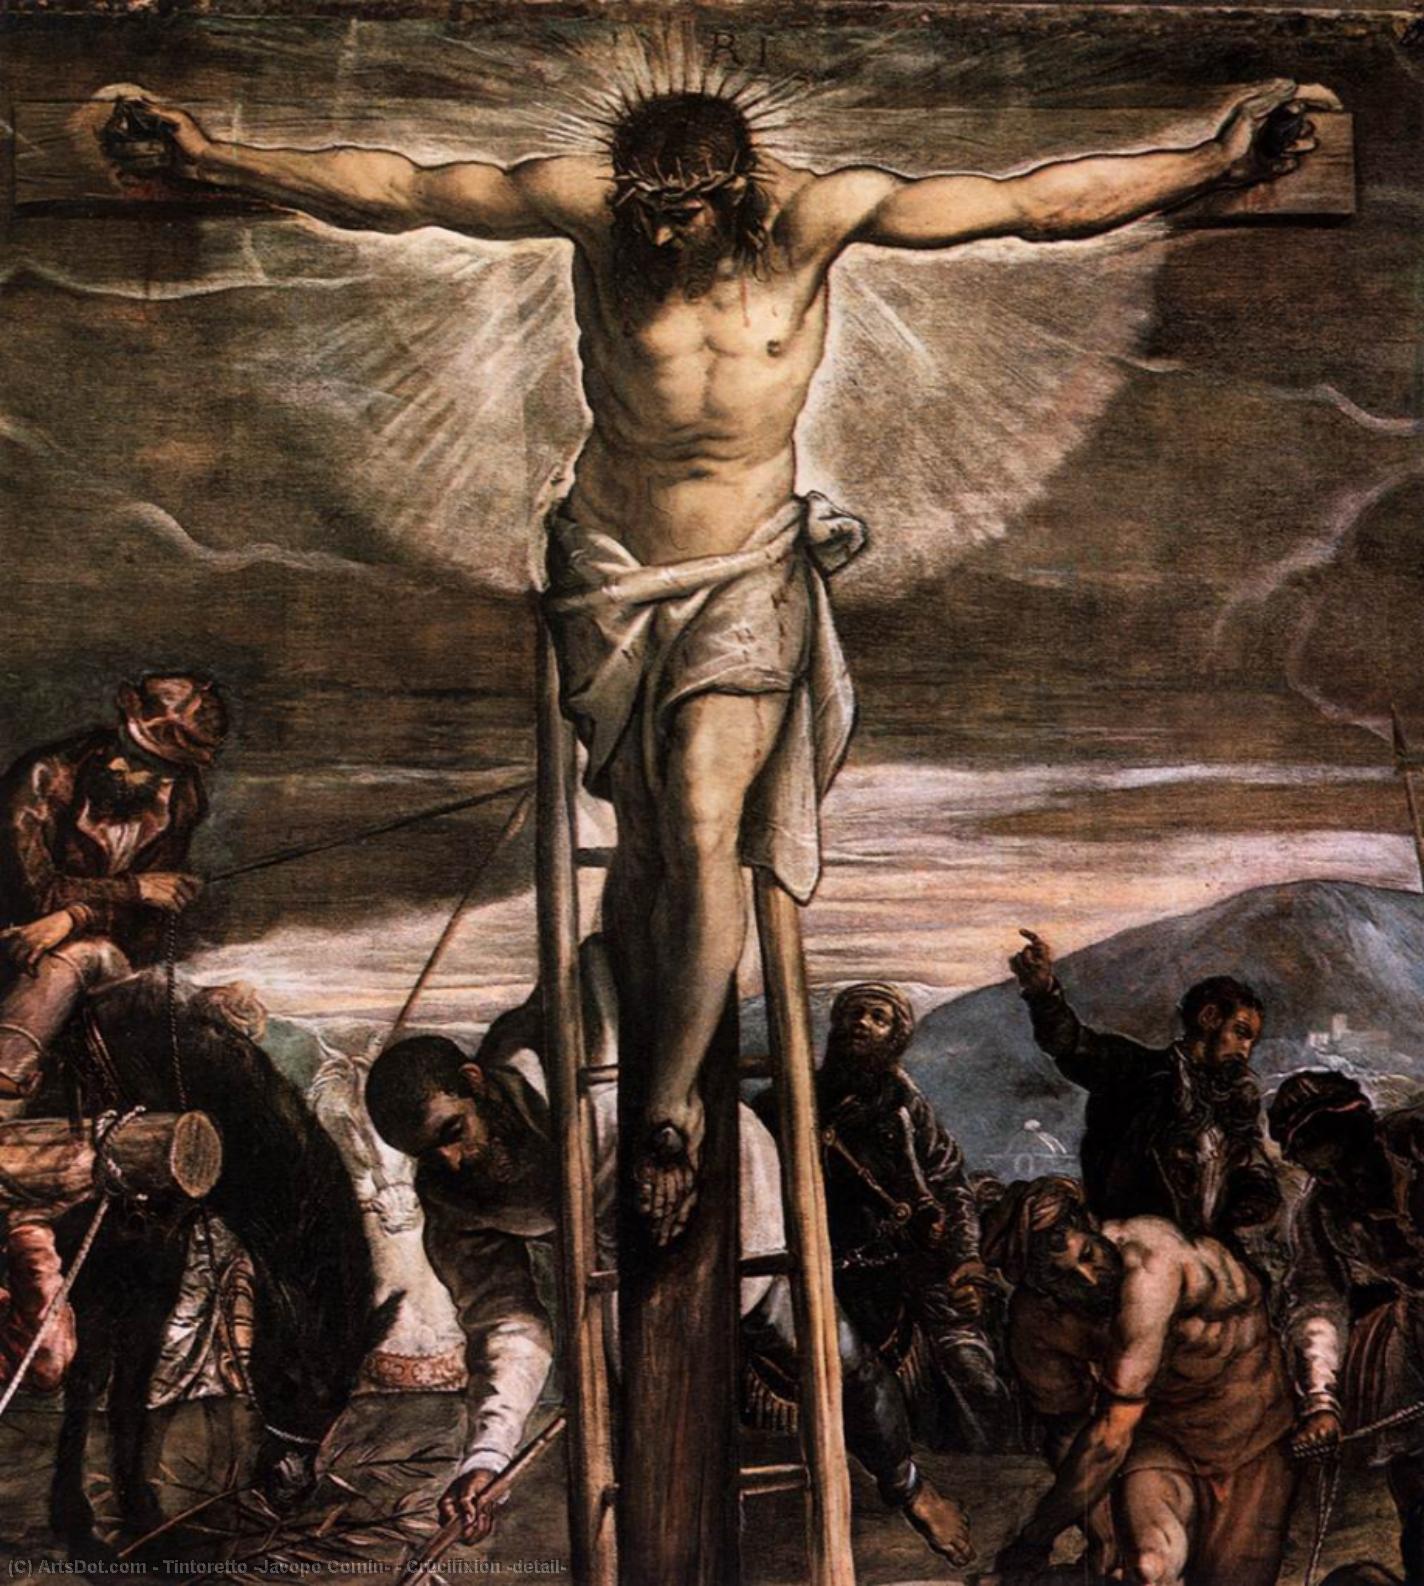 WikiOO.org - Encyclopedia of Fine Arts - Maľba, Artwork Tintoretto (Jacopo Comin) - Crucifixion (detail)